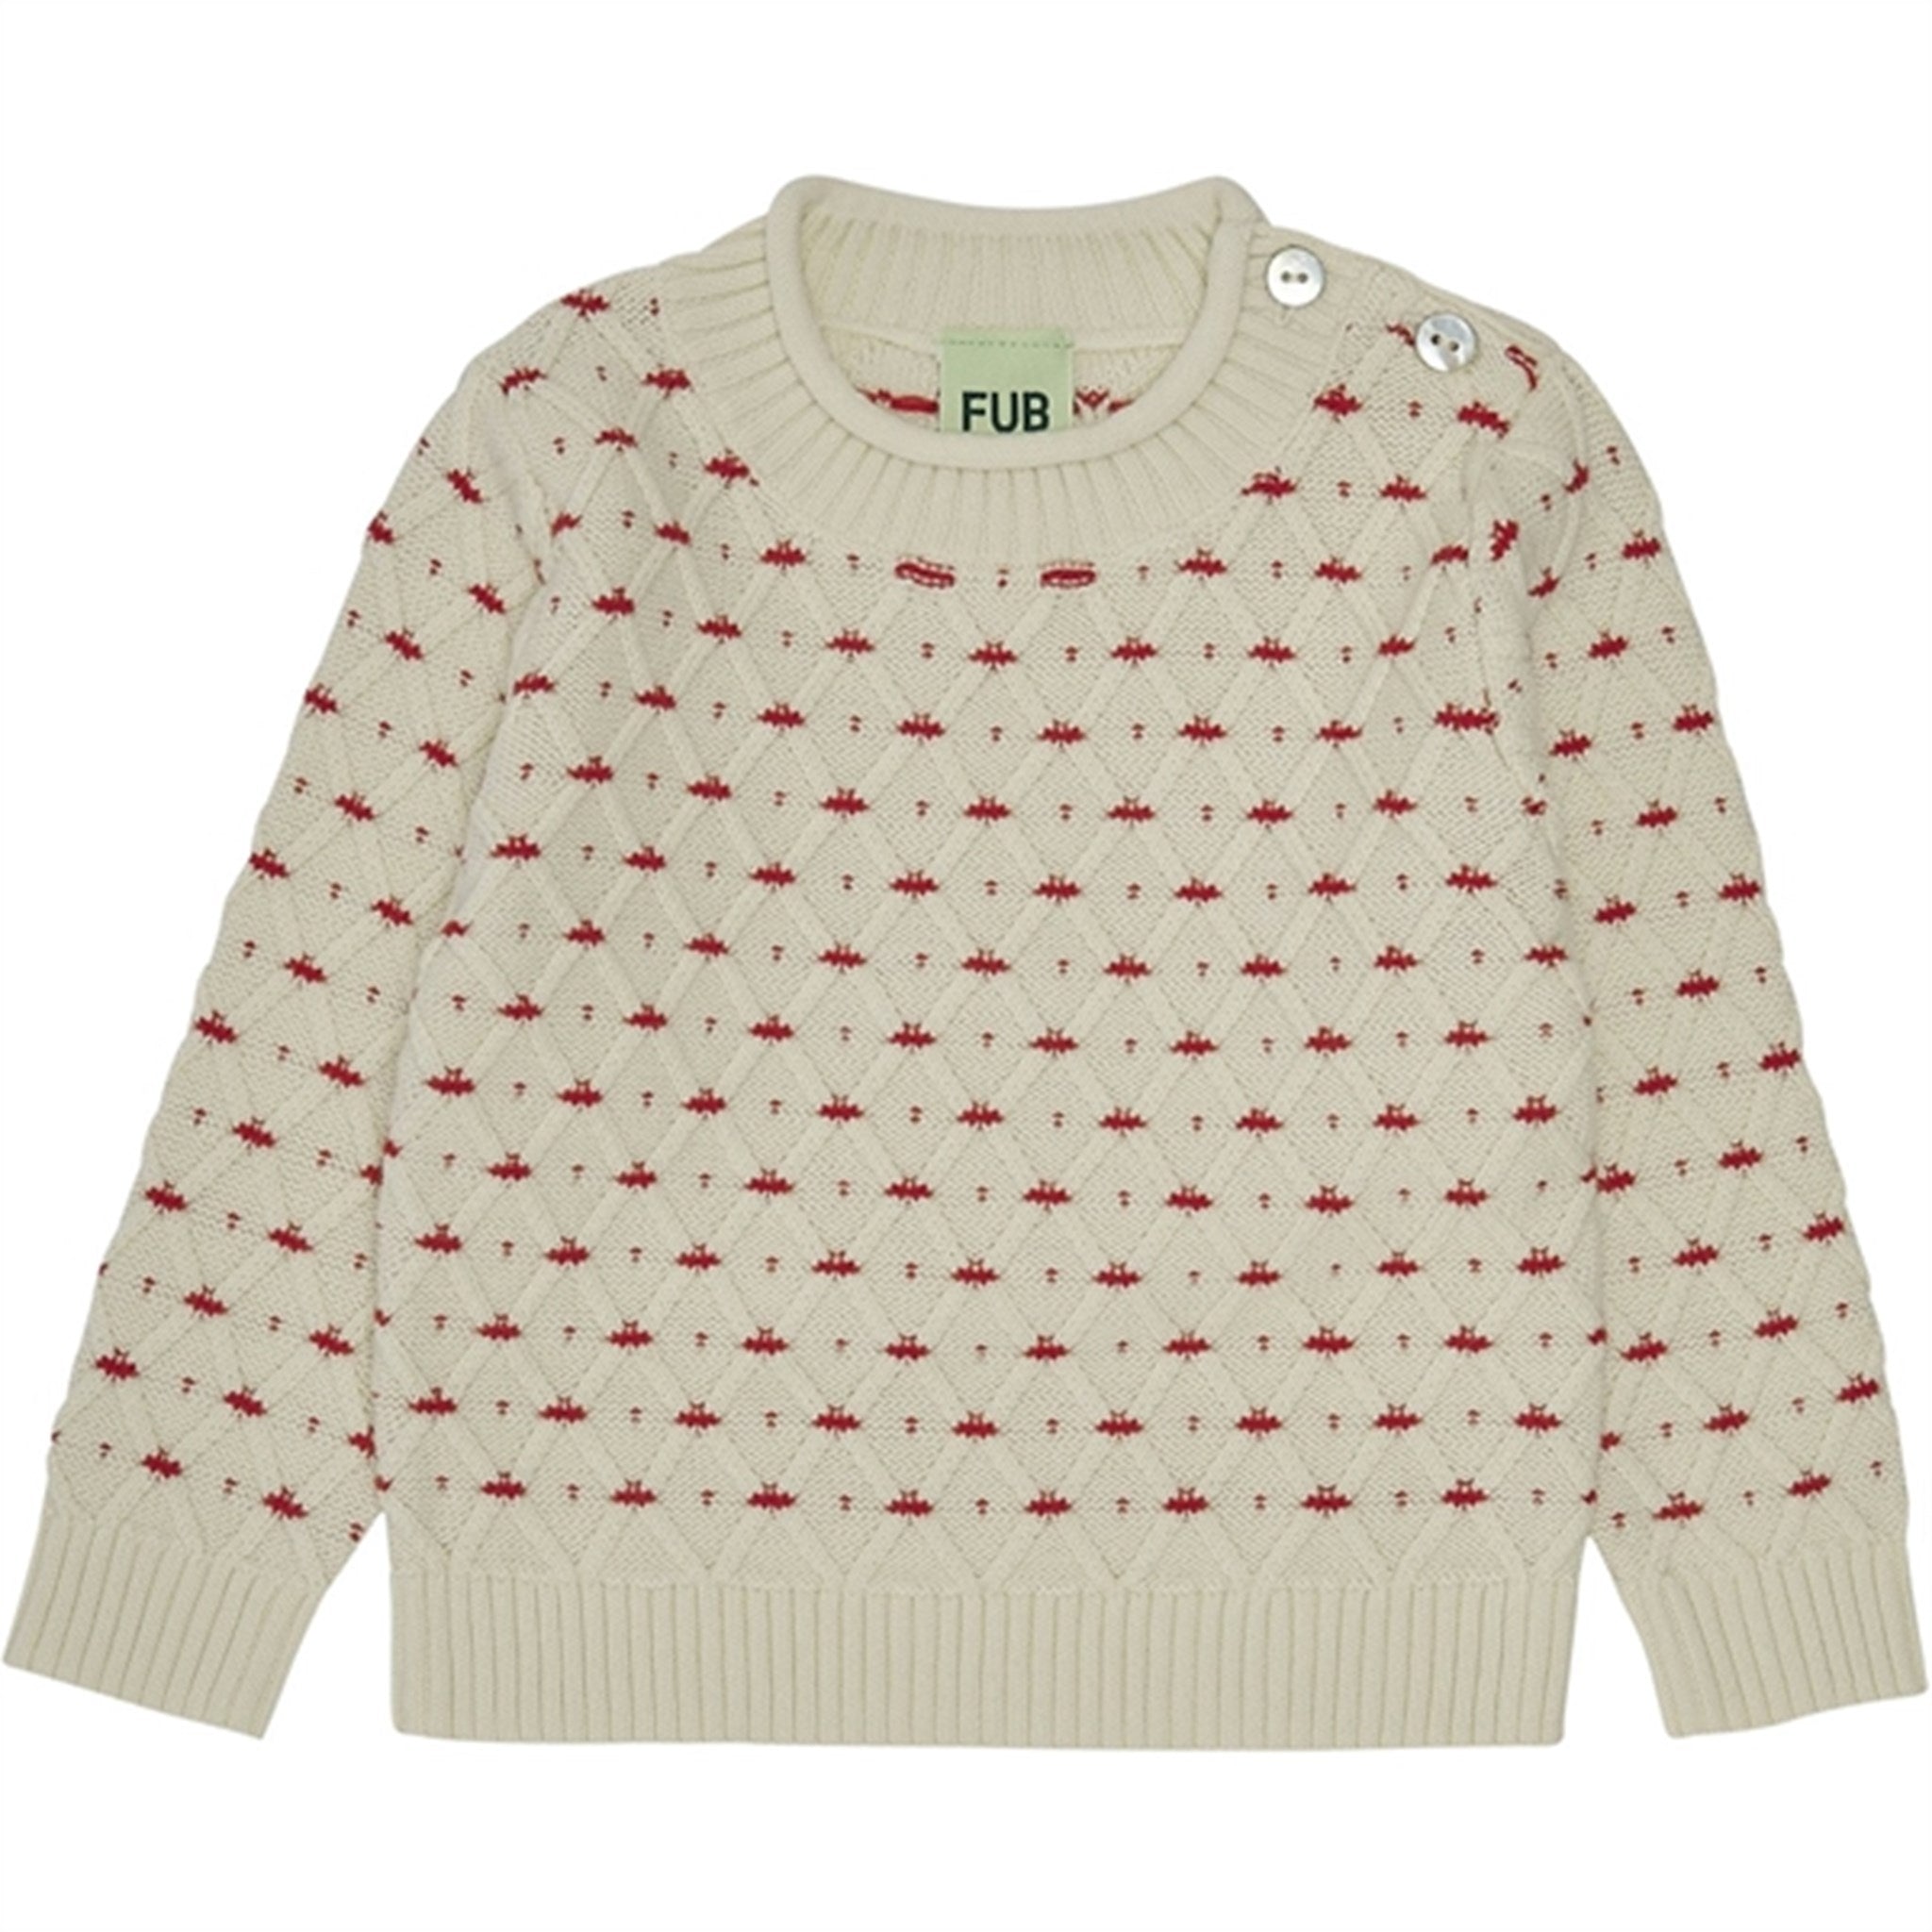 FUB Baby Rhombus Sweater Ecru/Bright Red